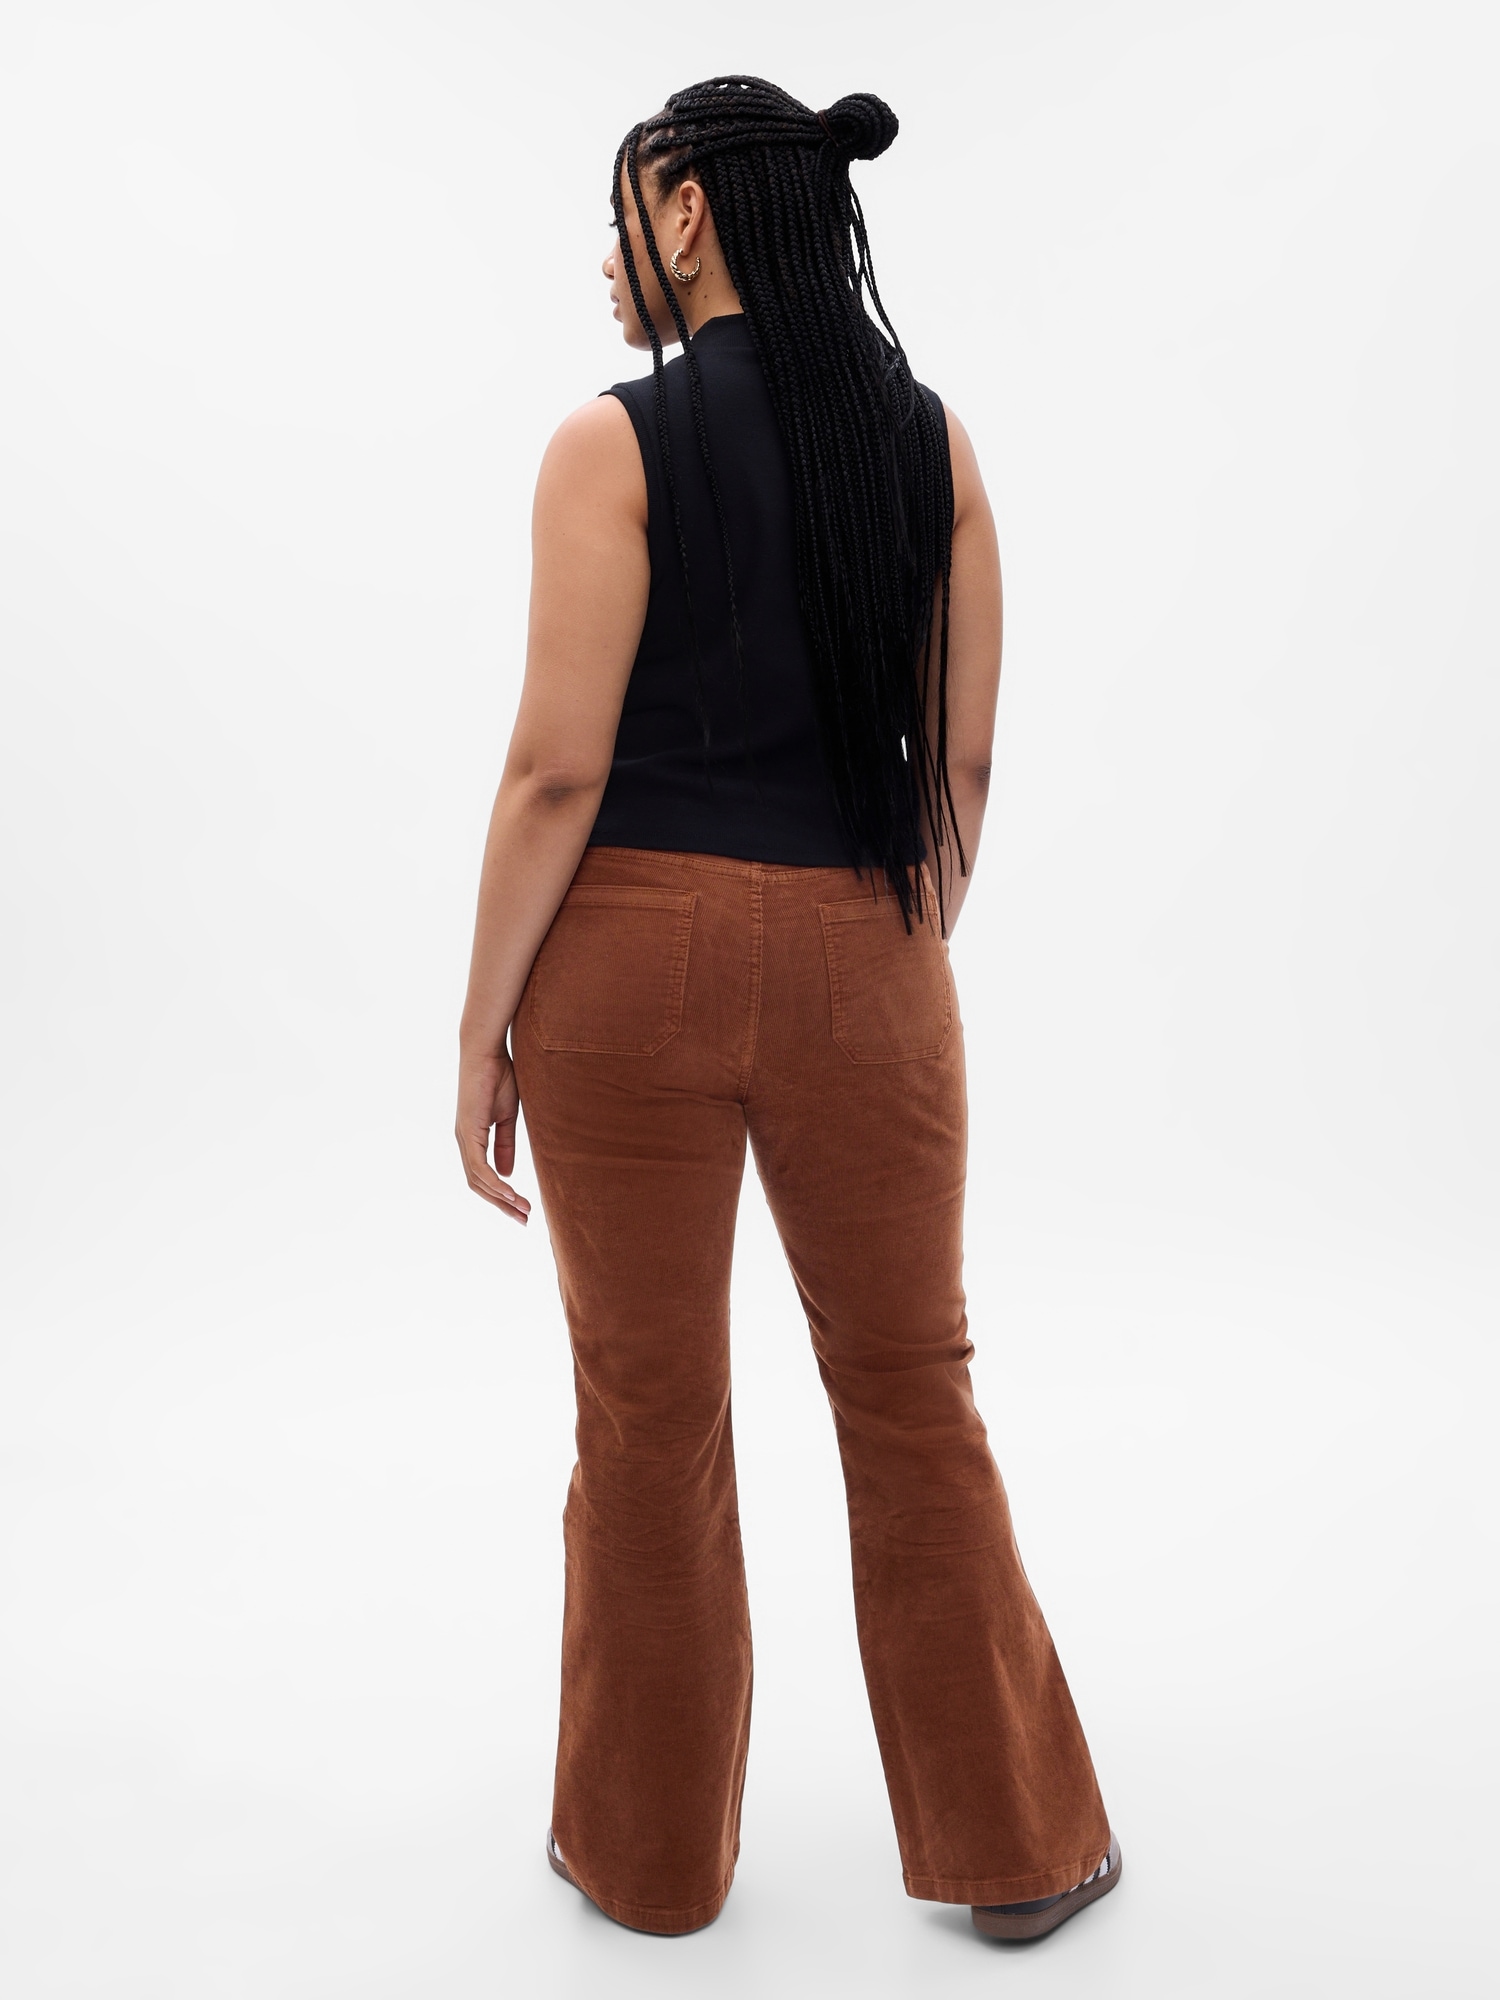 70's Flared Trousers , Orange Paisley Fabric | eBay